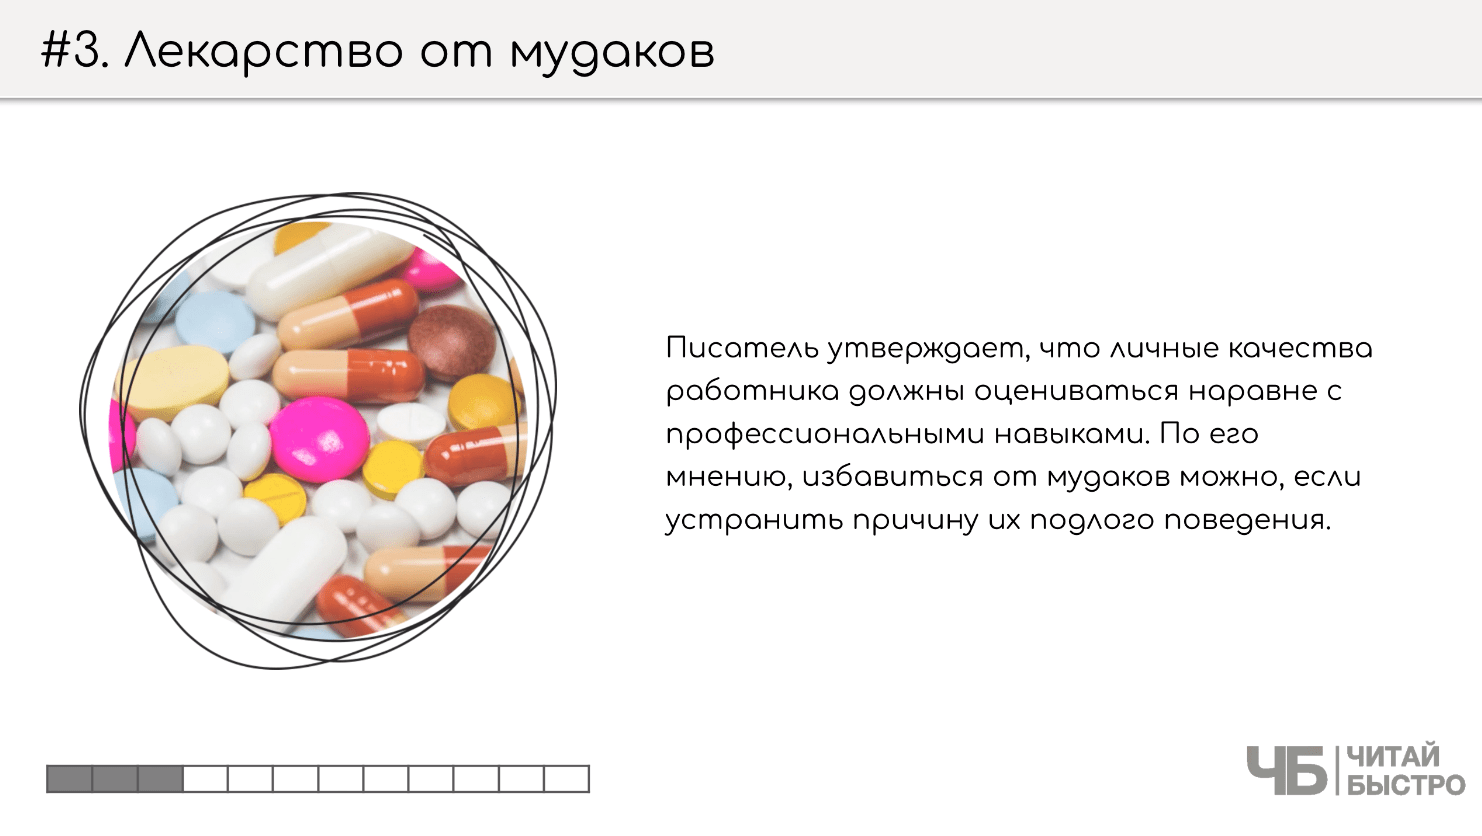 На этом слайде изображен тезис о лекарстве от мудаков и иллюстрация таблеток.